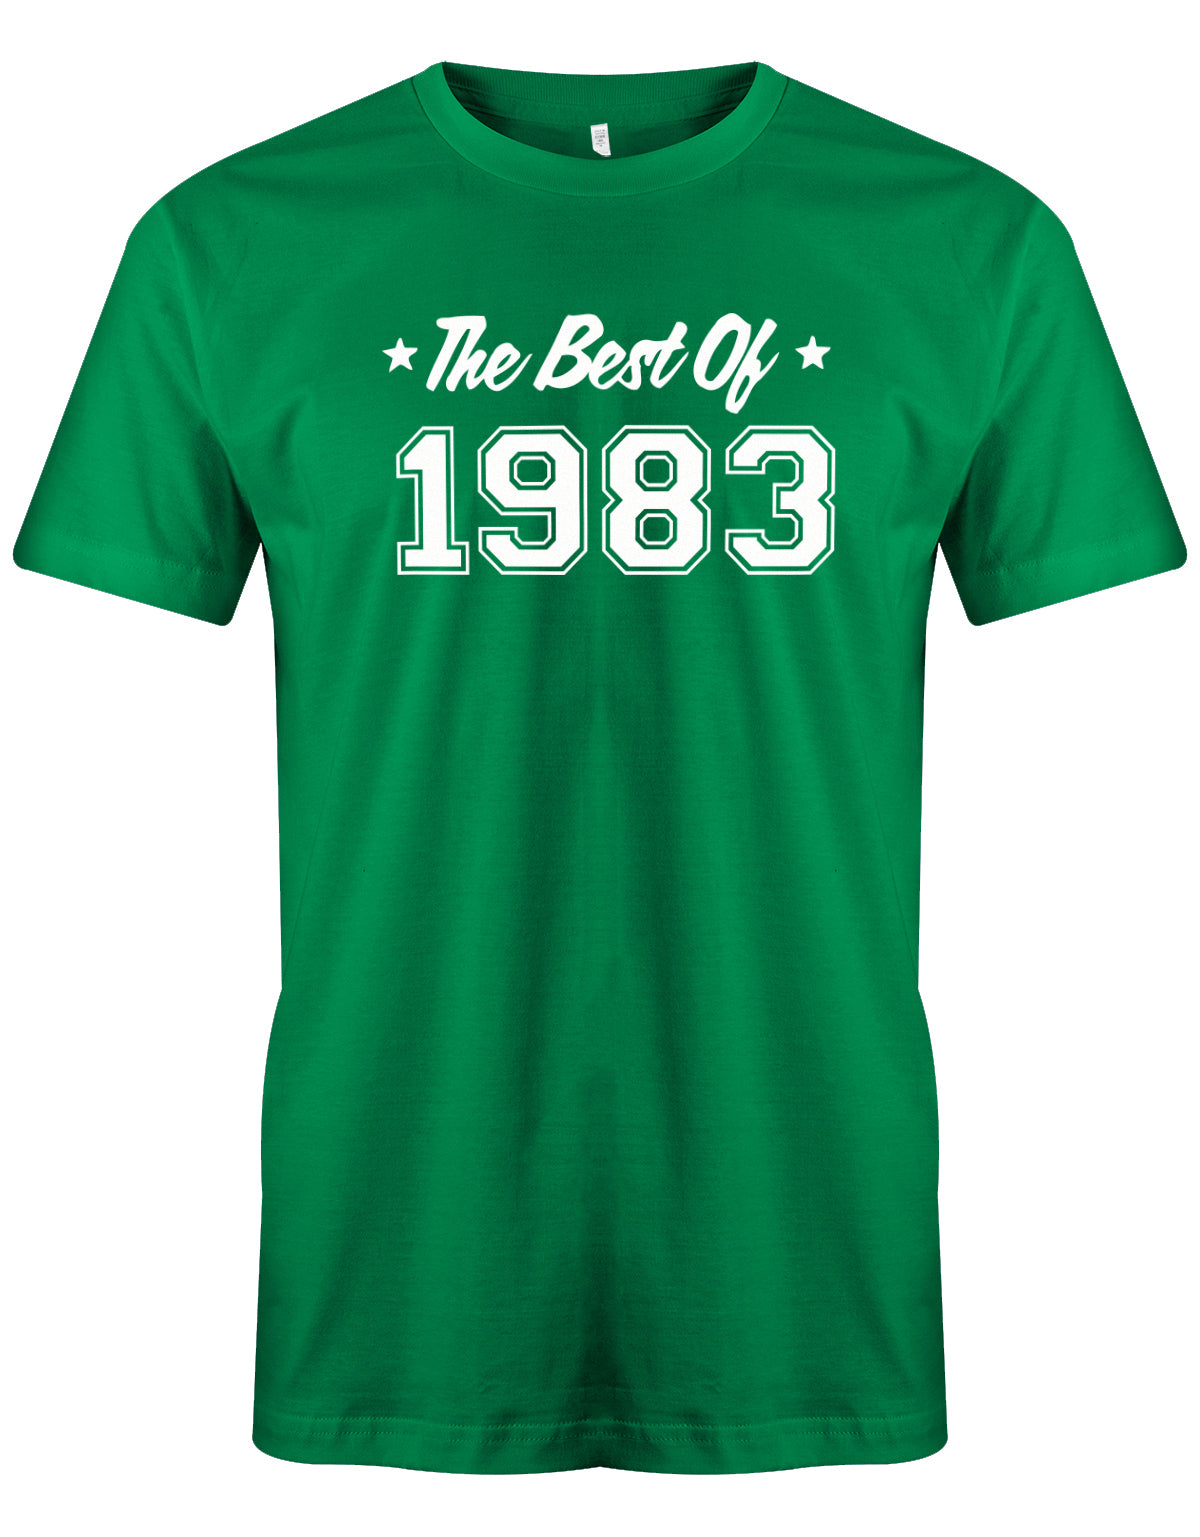 The best of 1983 - T-Shirt 40 Geburtstag Männer - Jahrgang 1983 TShirt  Grün